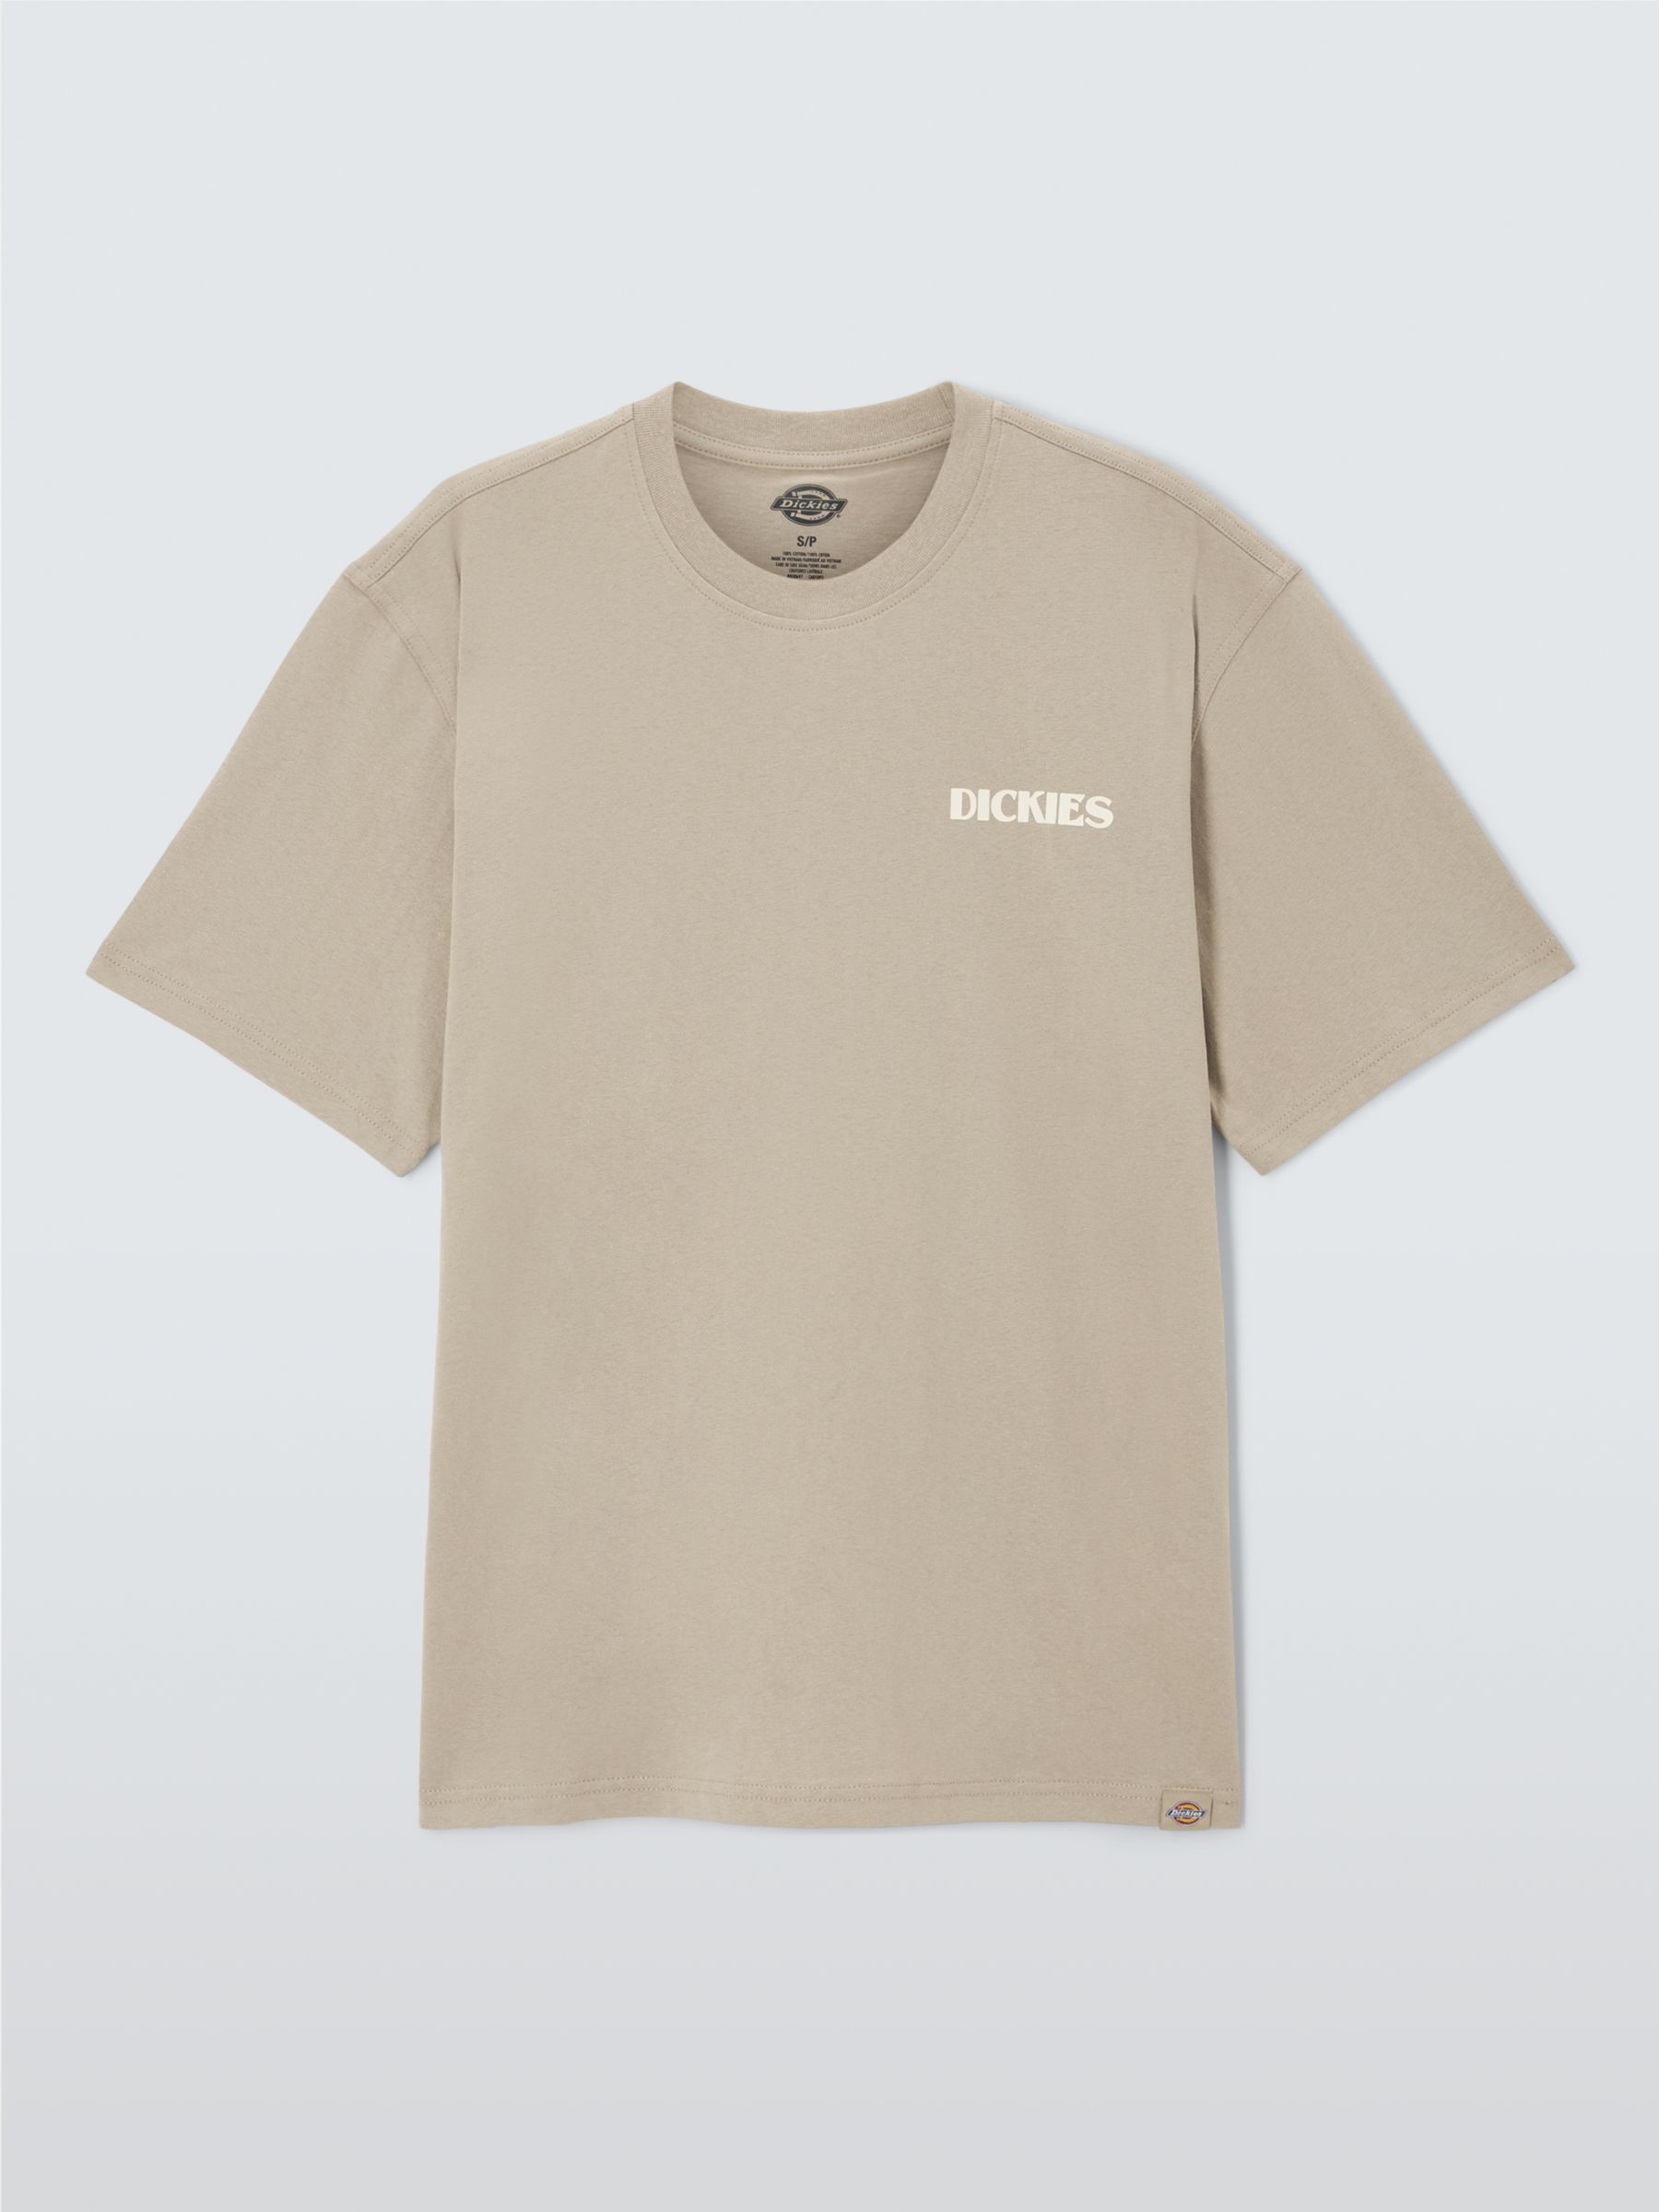 Dickies Herndon Short Sleeve T-Shirt, Sandstone, S